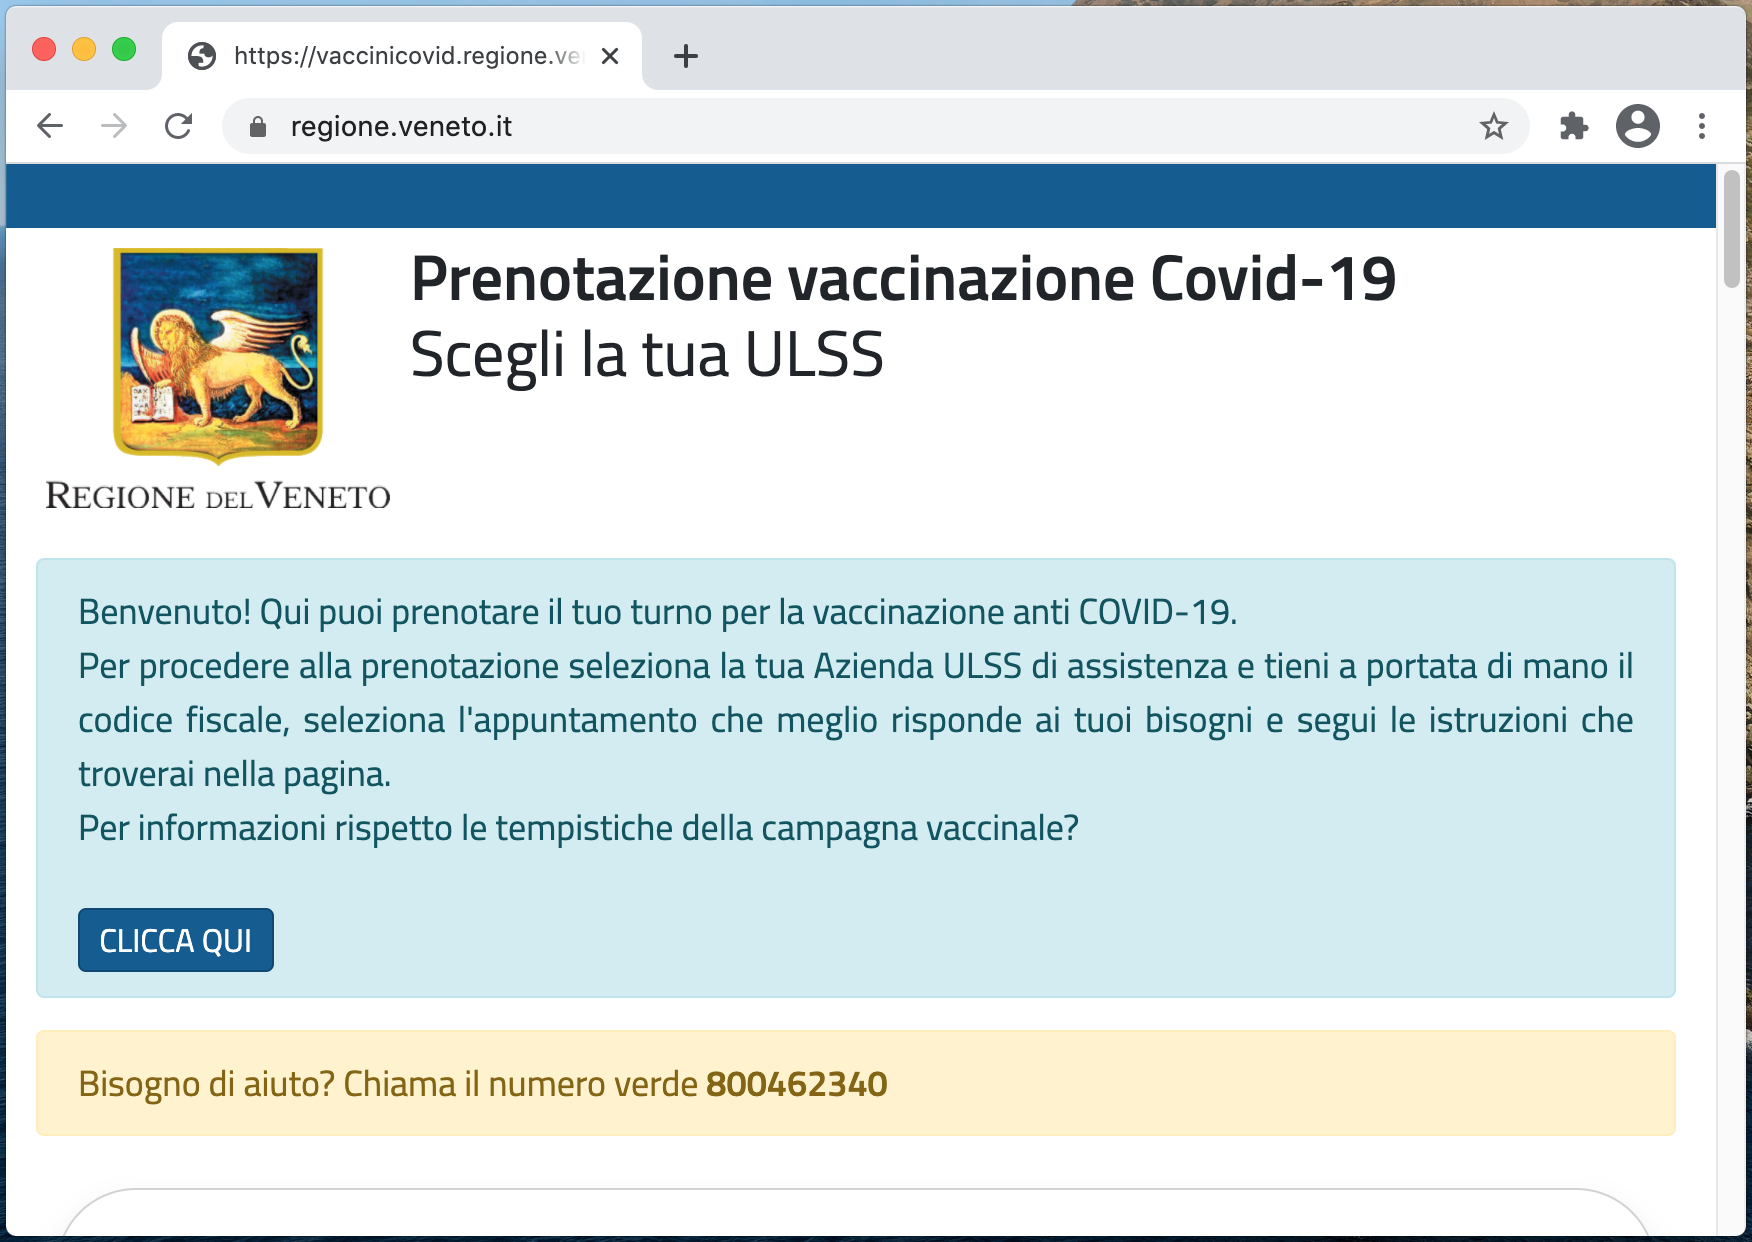 A screenshot of Regione del Veneto's vaccination booking website.